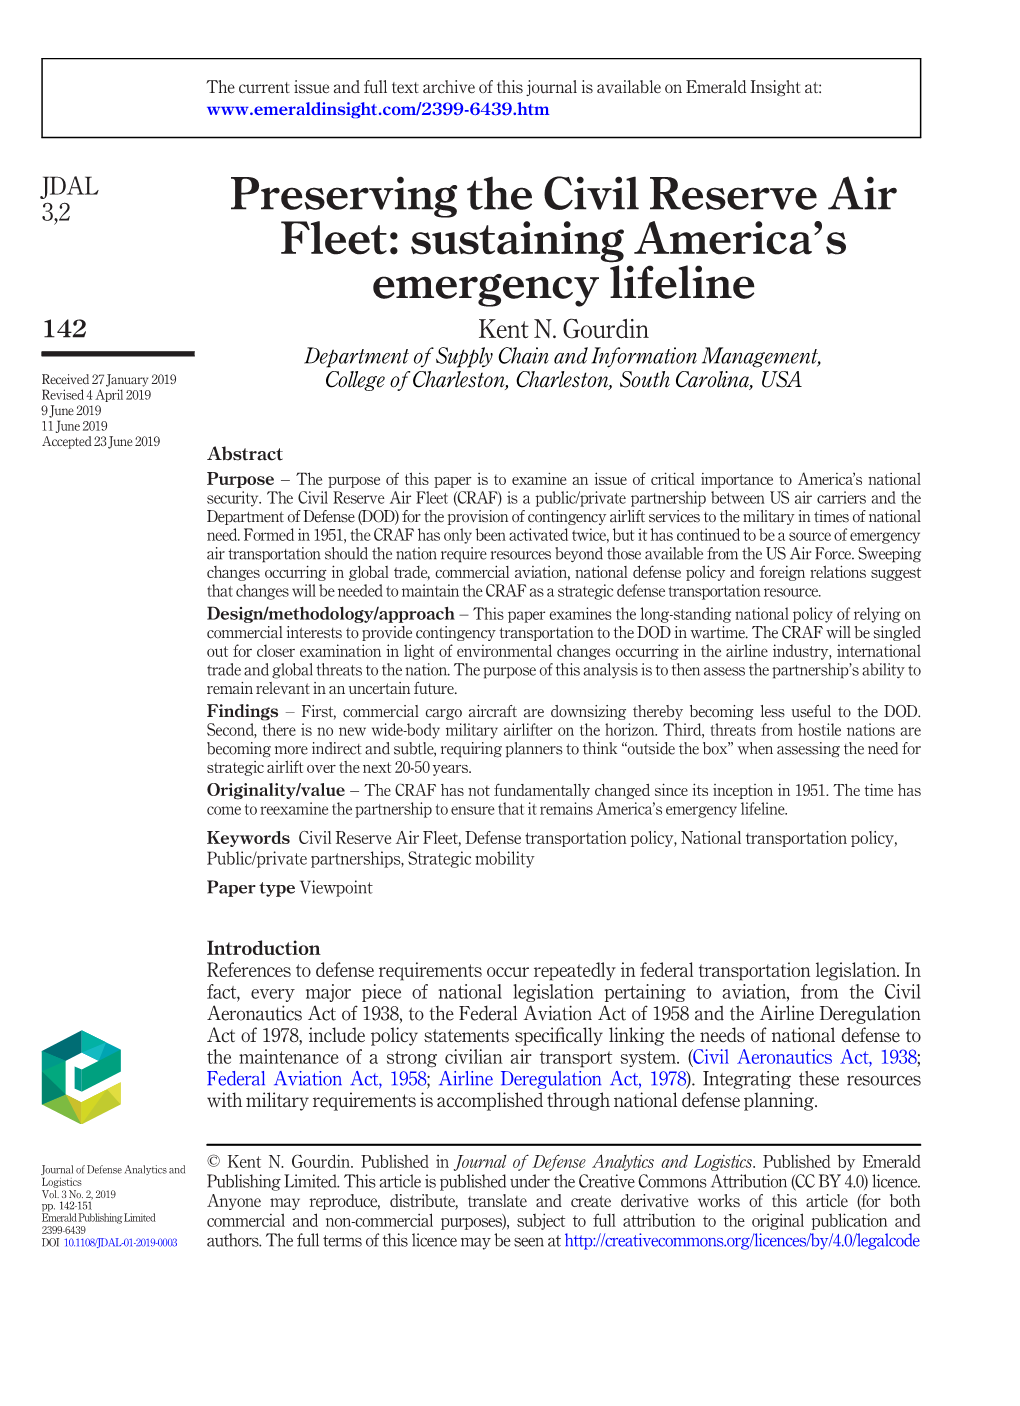 Preserving the Civil Reserve Air Fleet: Sustaining America's Emergency